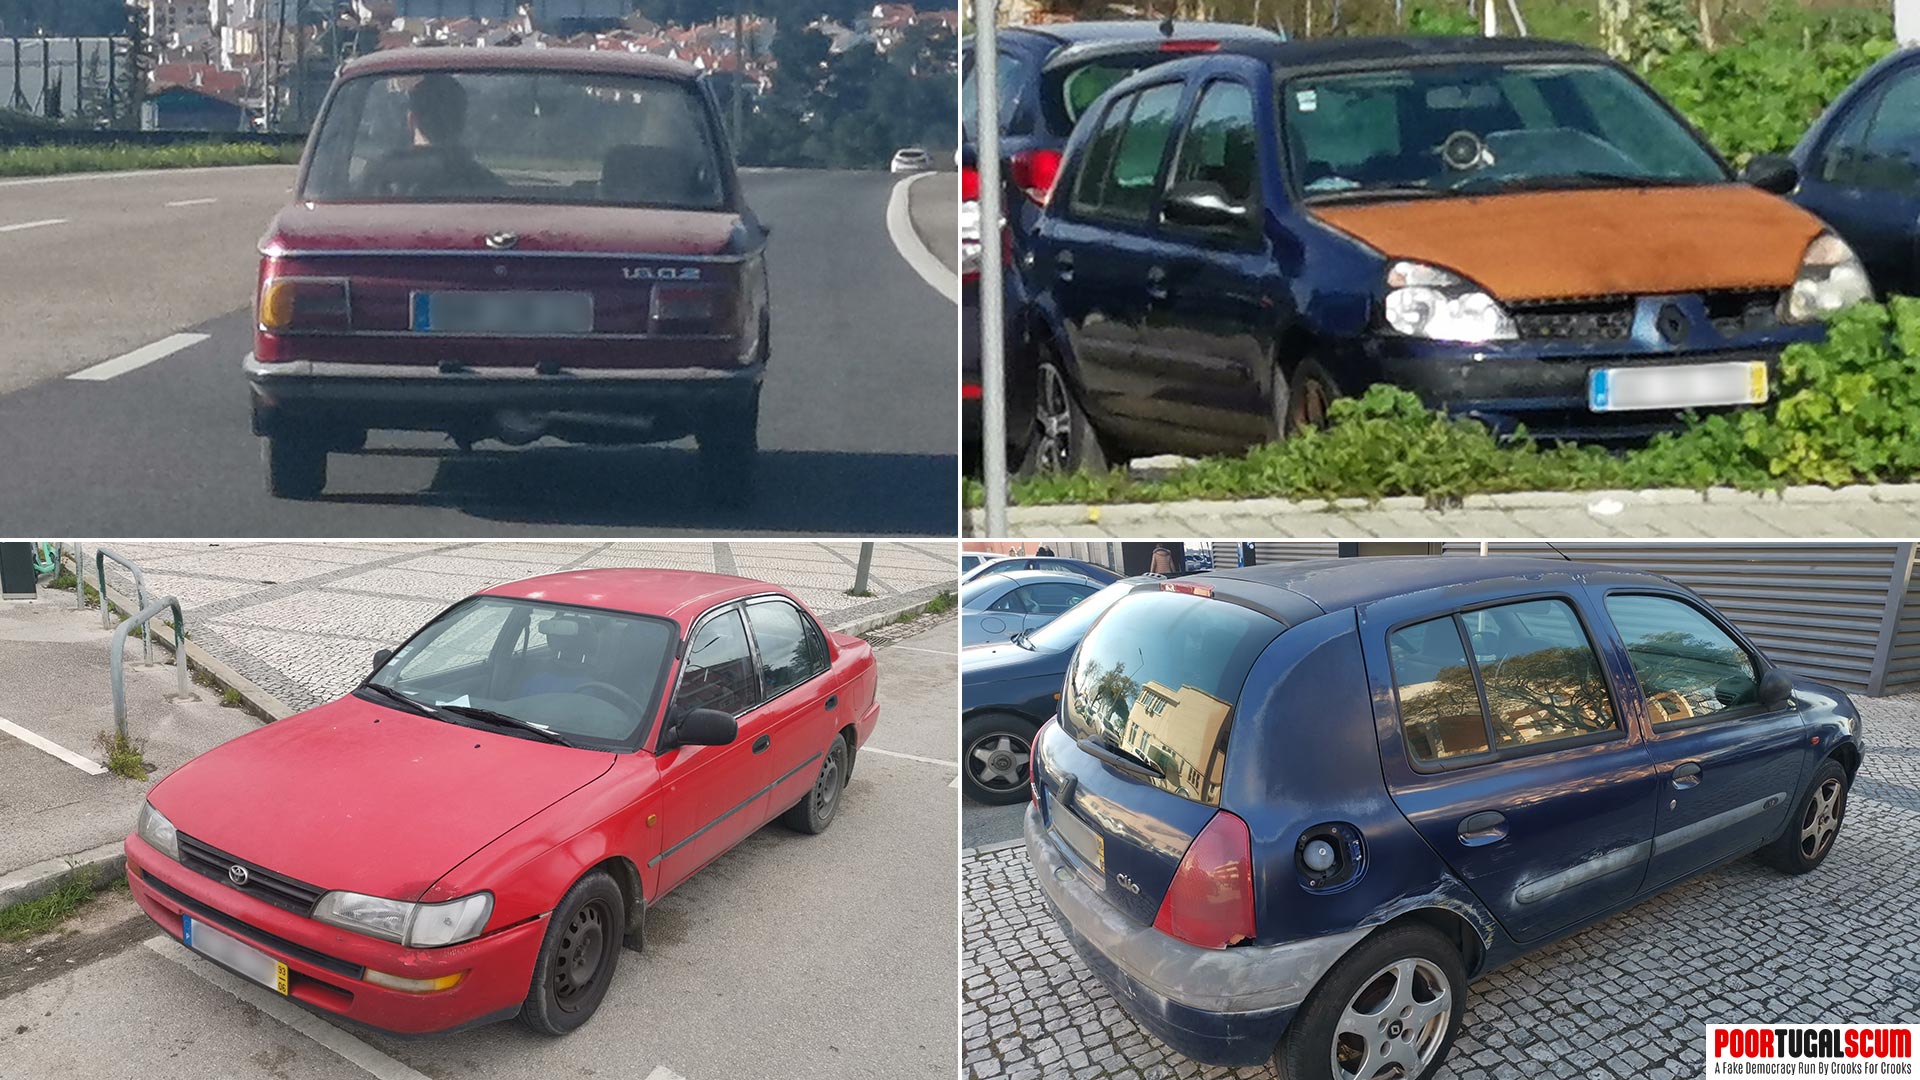 Portuguese cars